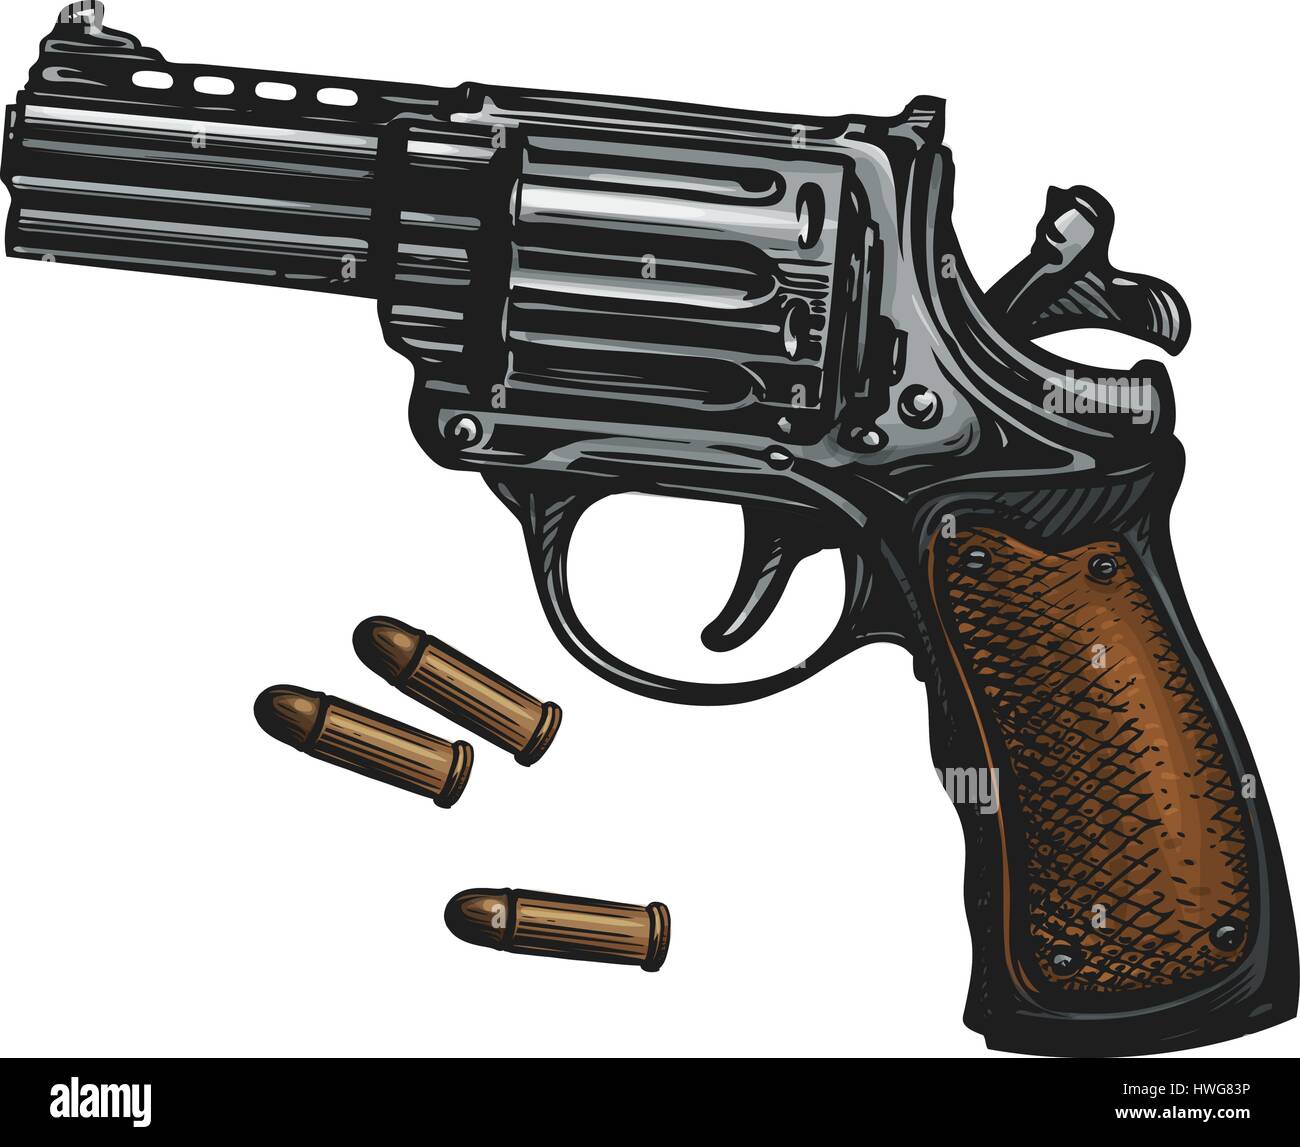 Pistole, Revolver Waffe und Munition, Skizze. Vintage Vektor-illustration Stock Vektor